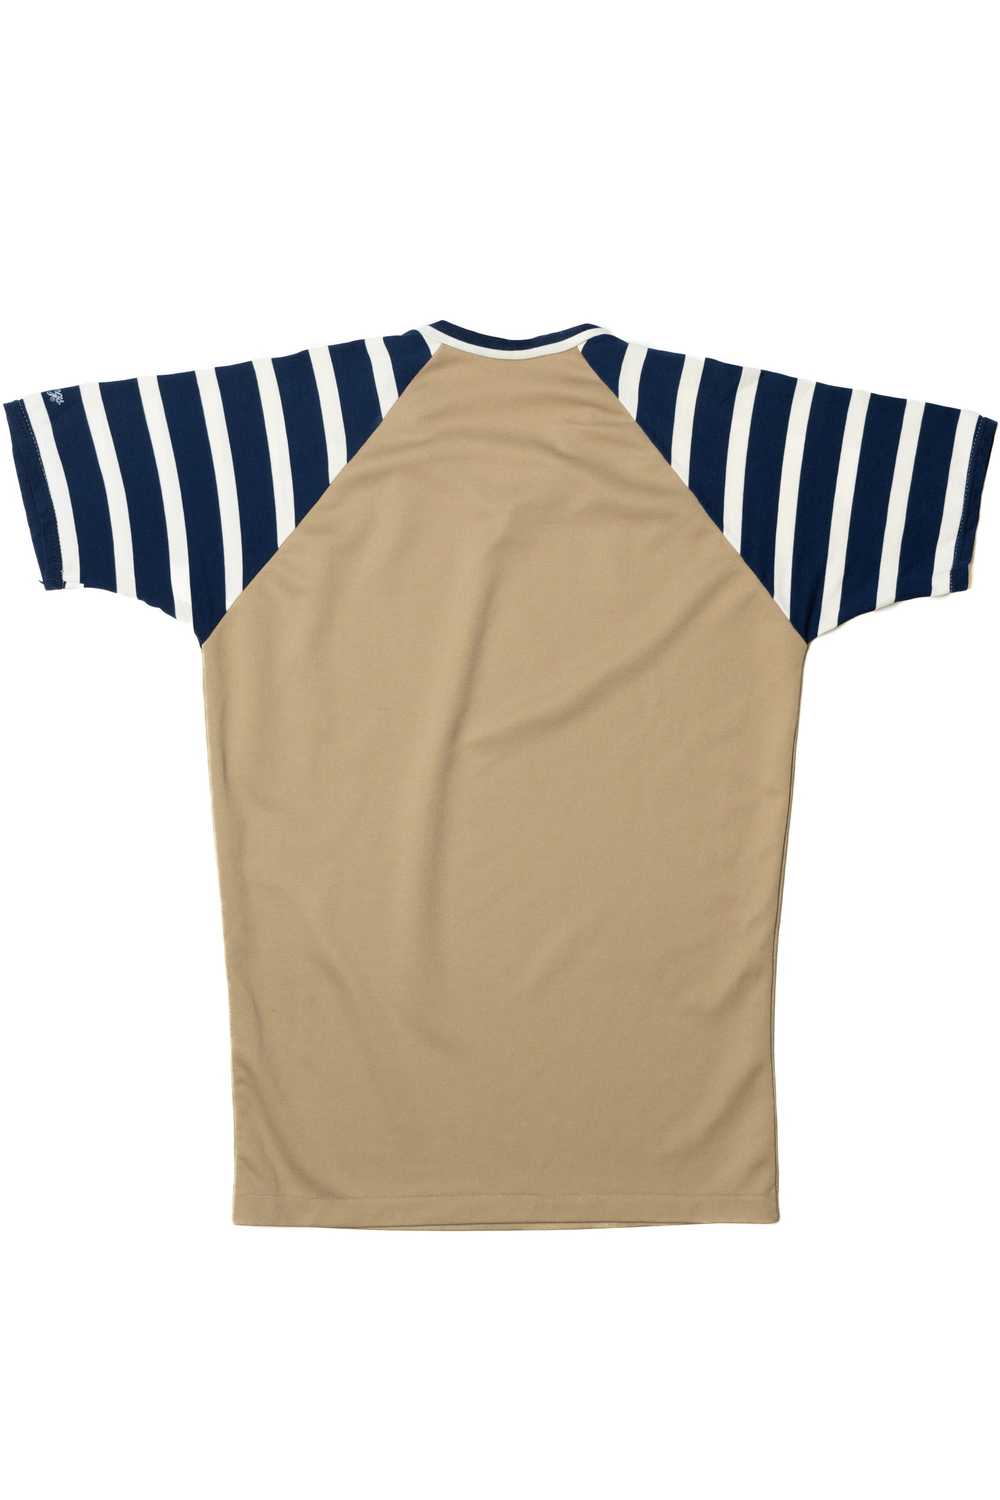 Vintage Striped Sleeve Blank Rawlings Baseball Je… - image 2